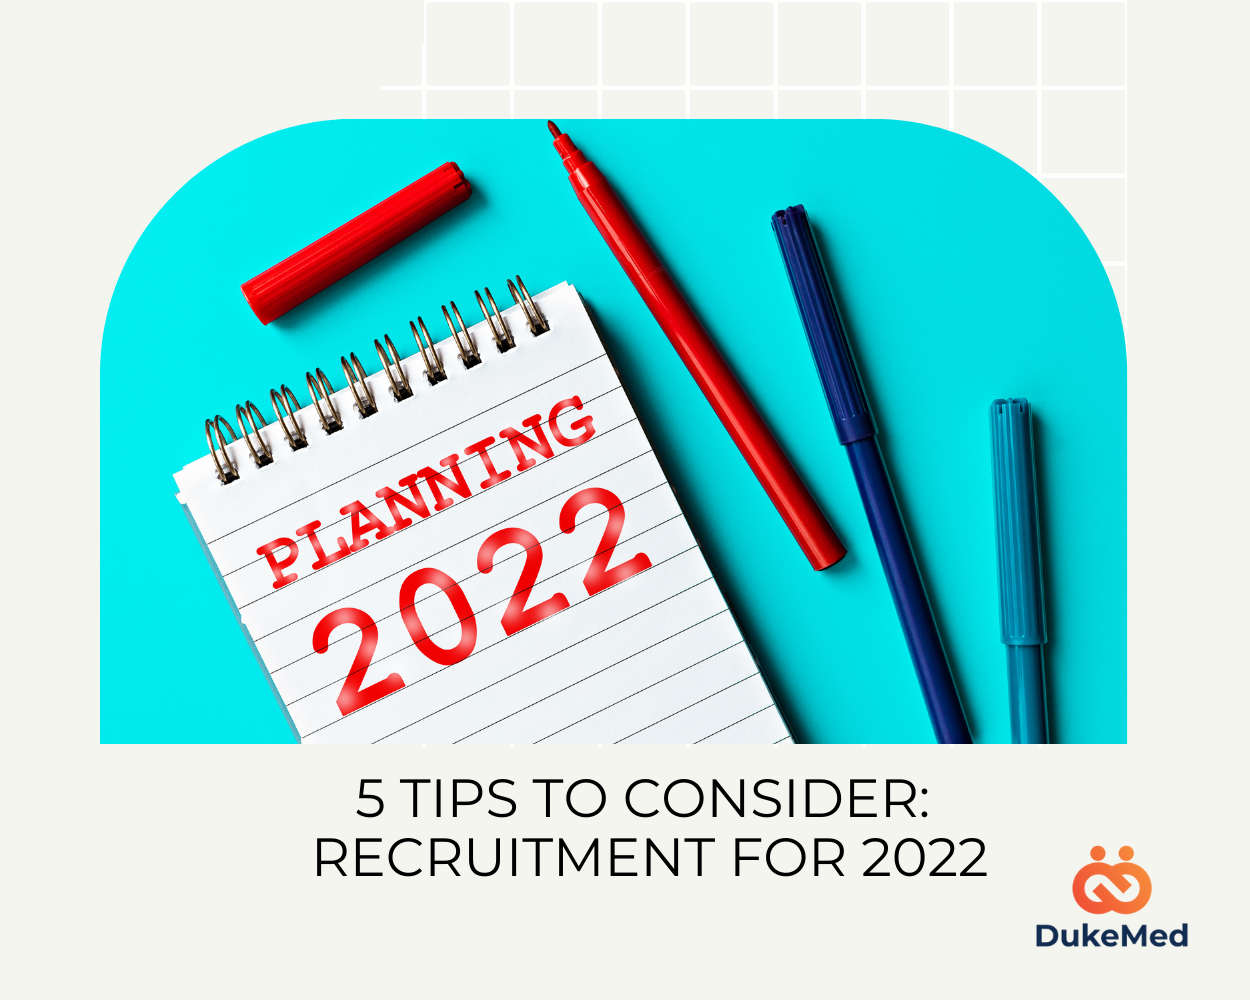 Recruitment planning for 2022